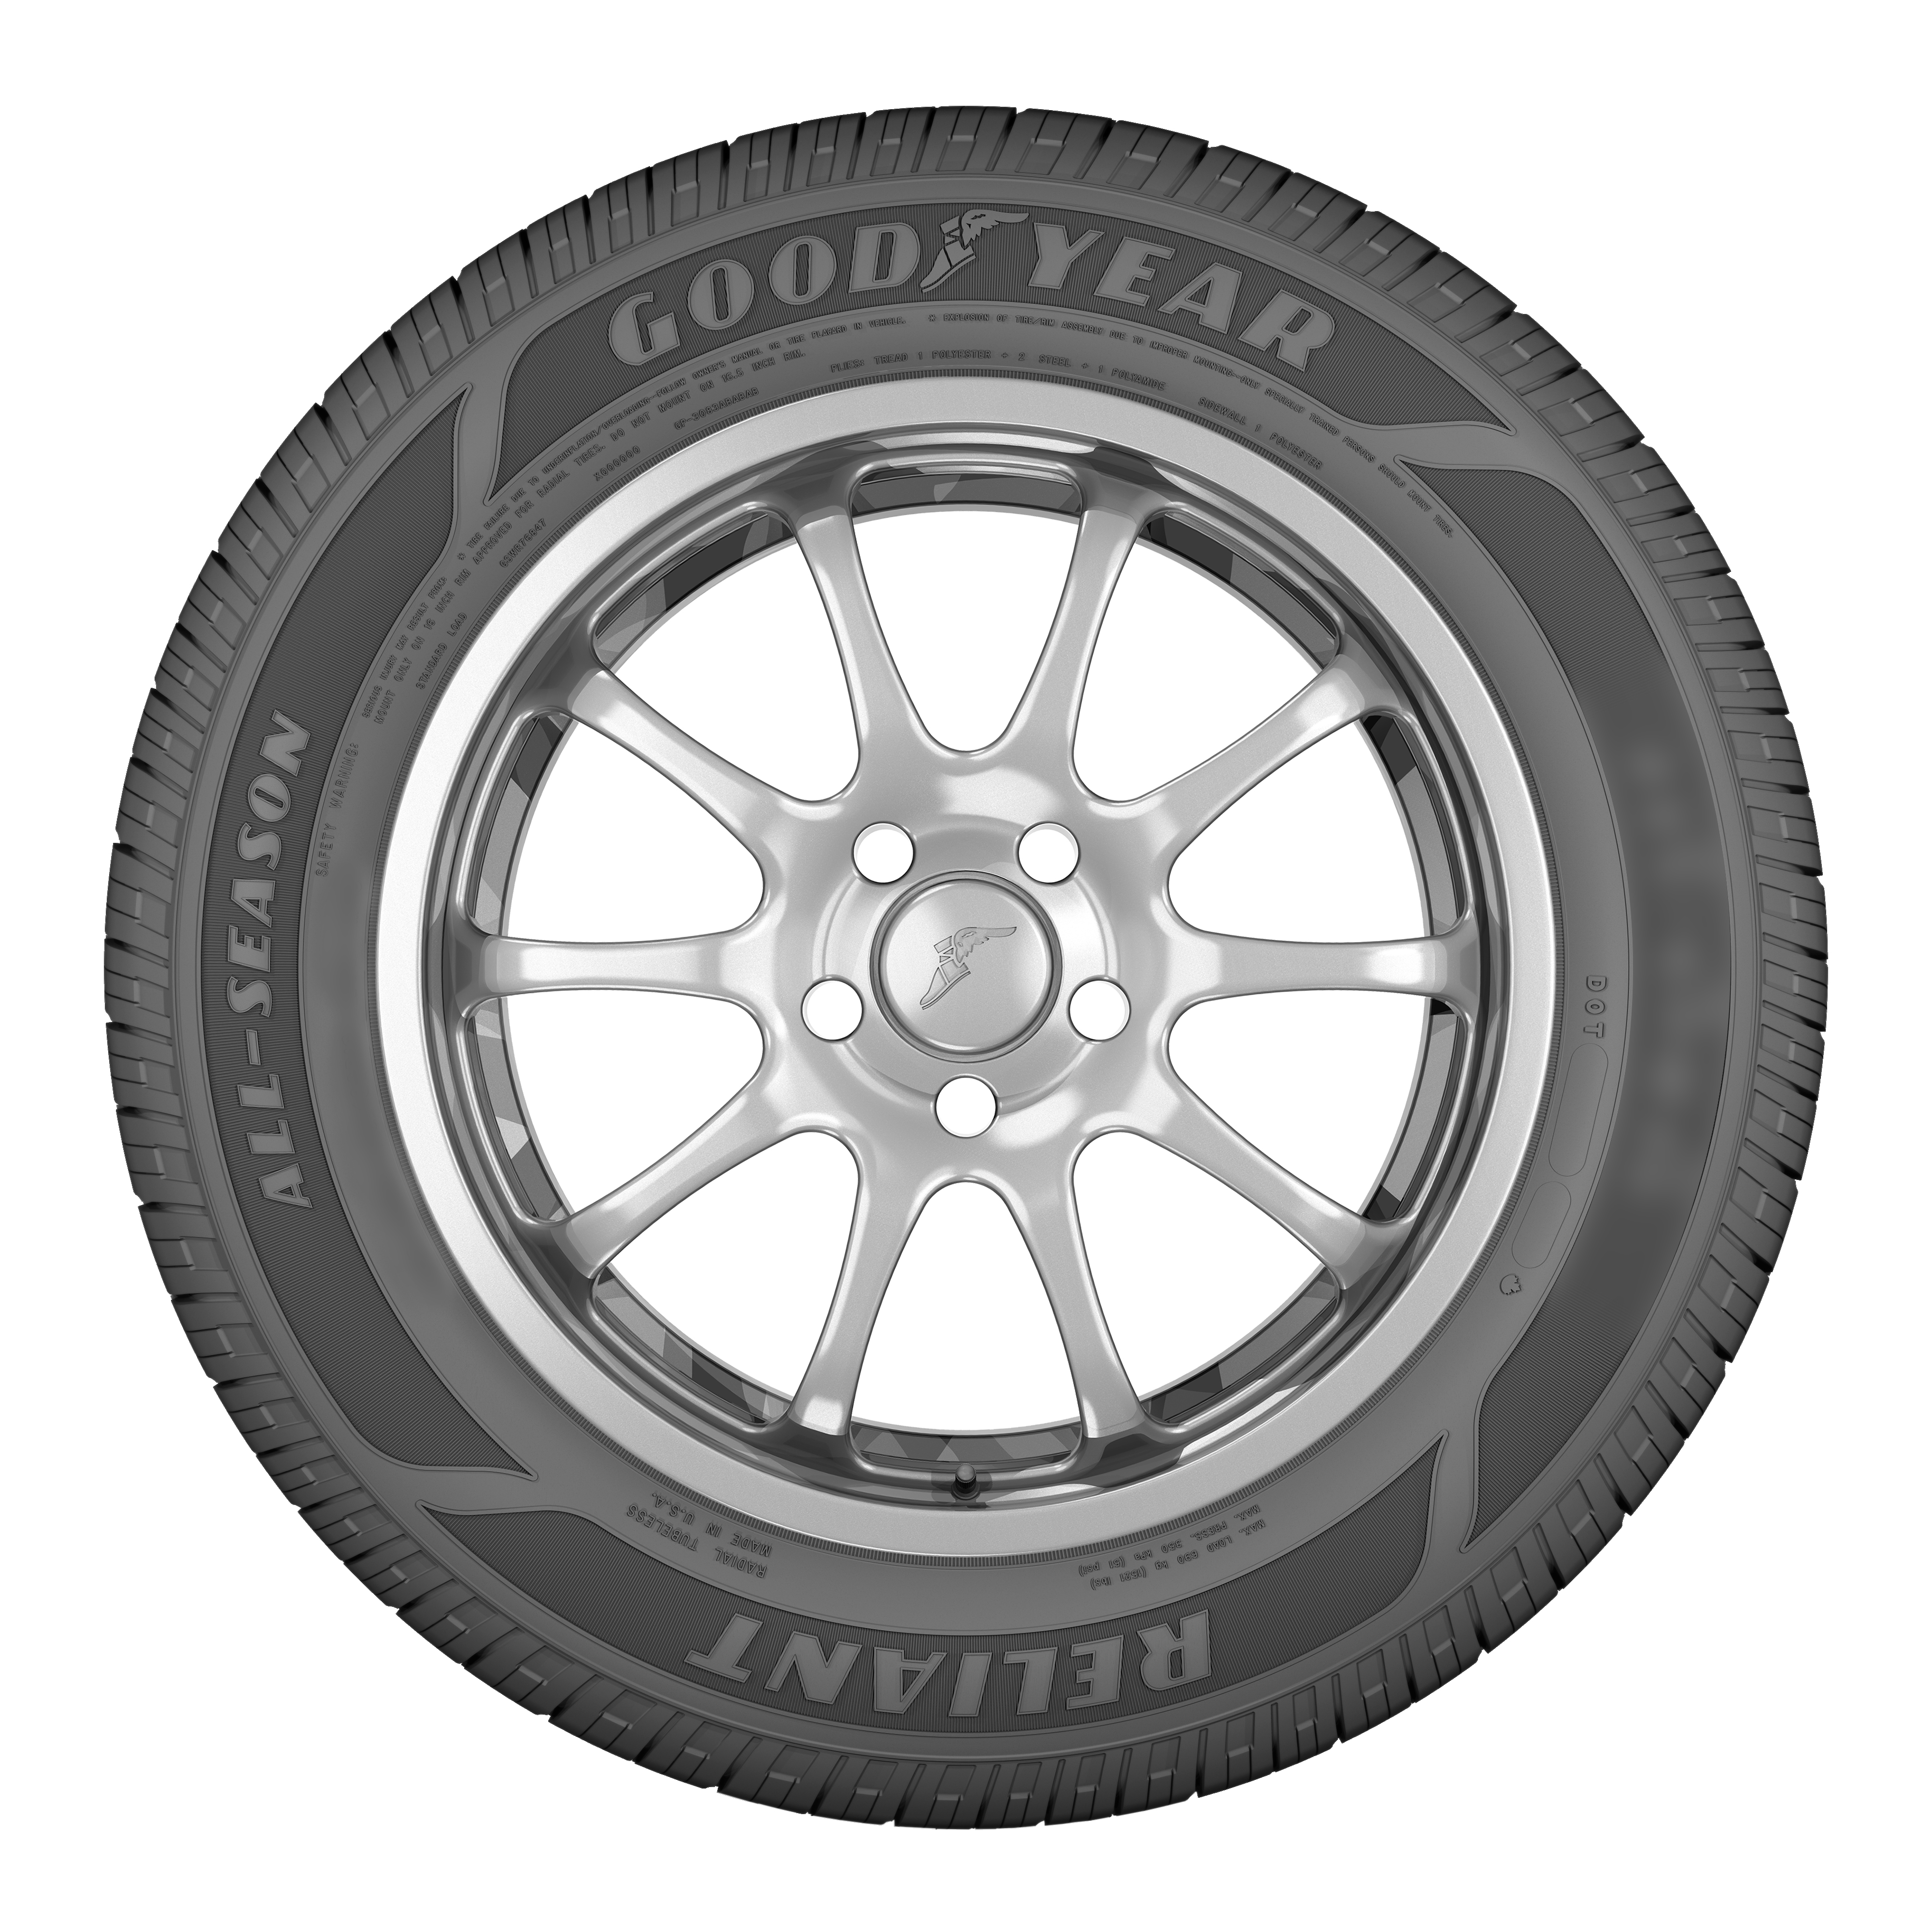 Goodyear Reliant All-Season 215/60R16 95V All-Season Passenger Car Tire - image 3 of 7